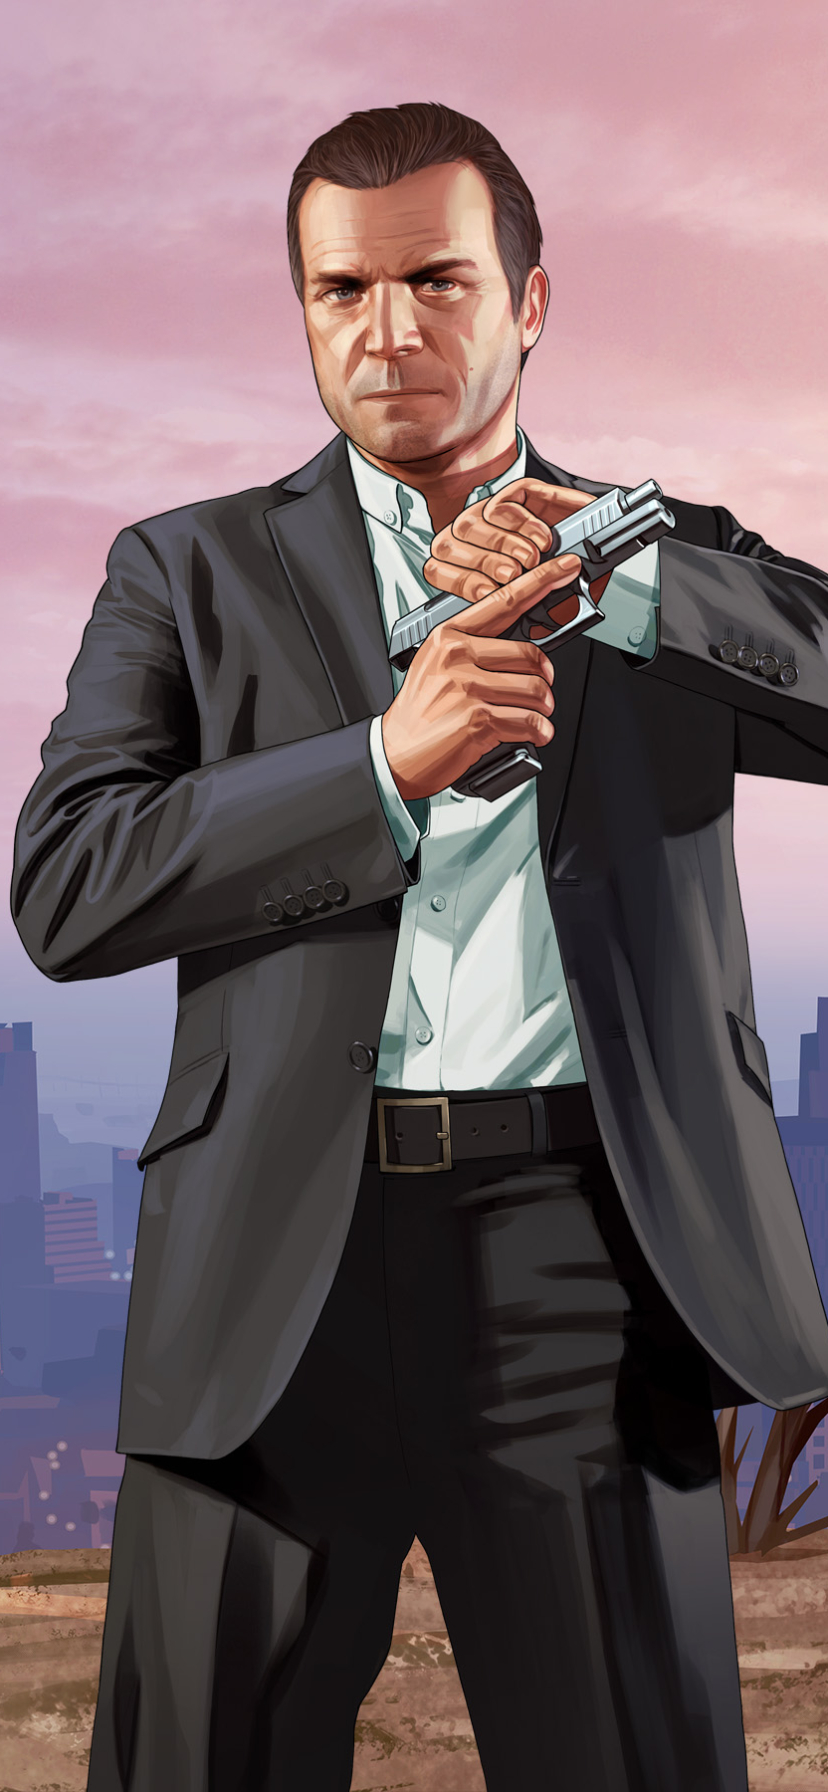 Grand Theft Auto V Phone Wallpaper